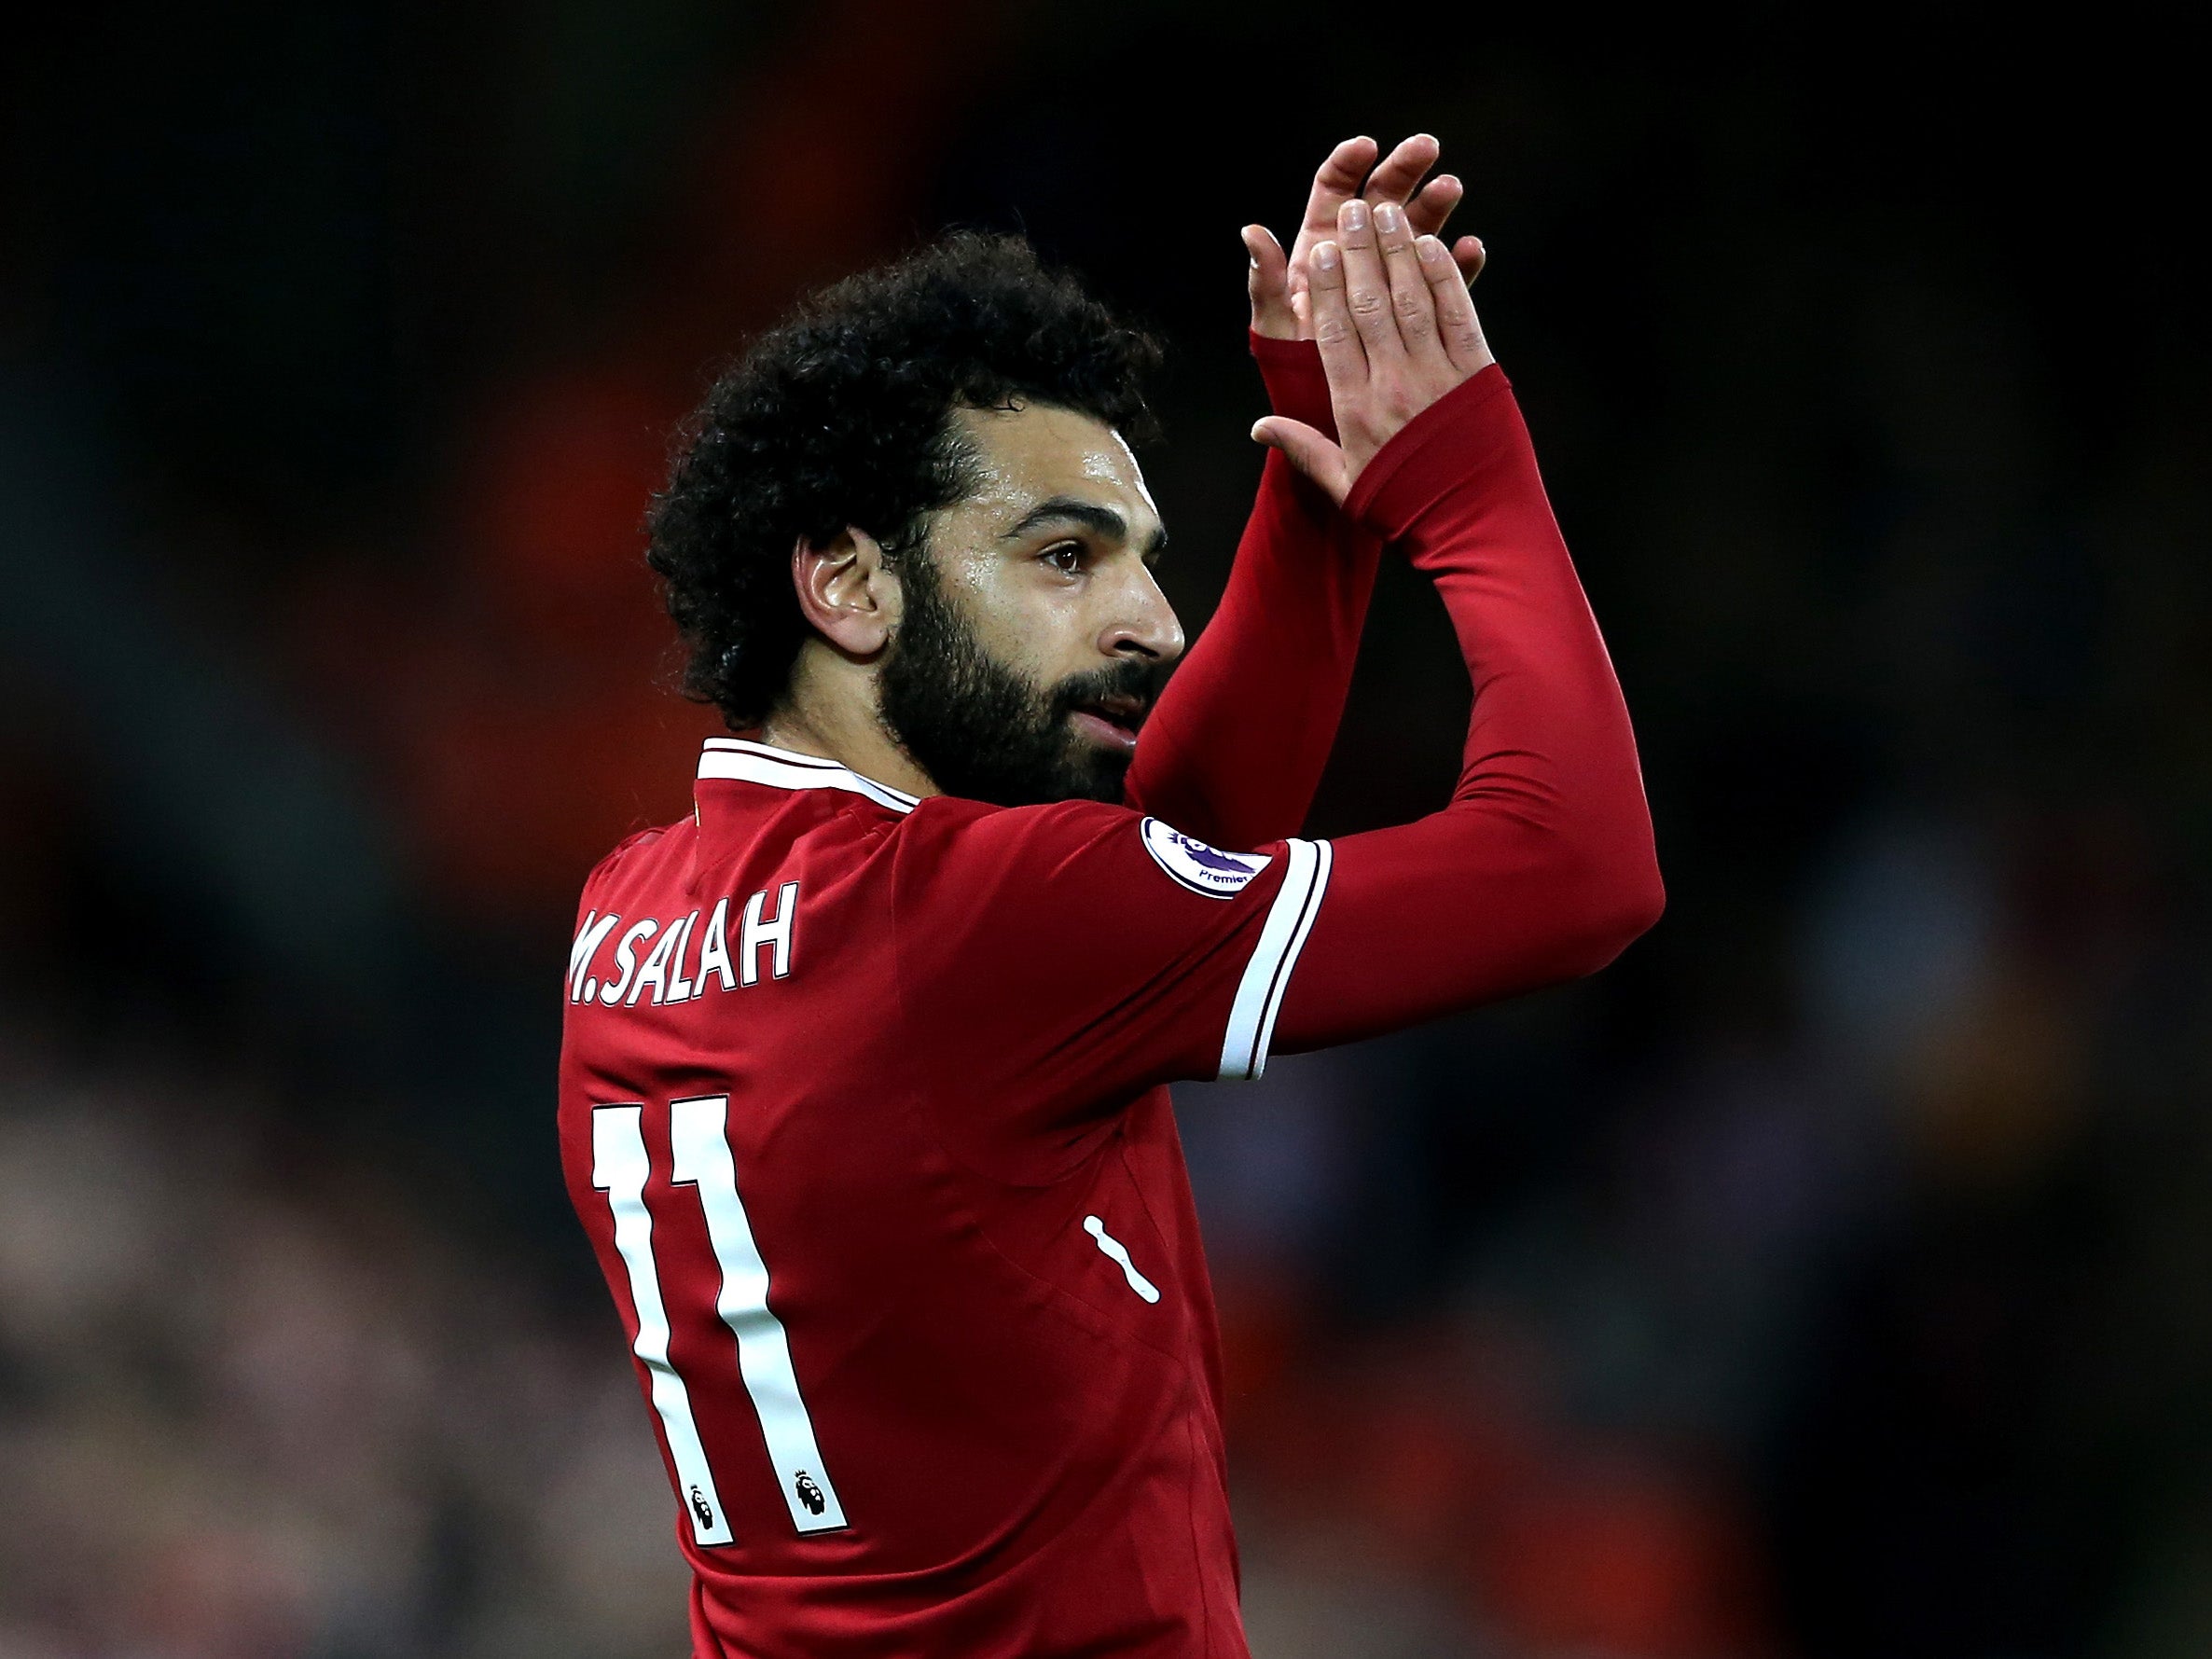 Salah already has 14 goals in 18 games this season